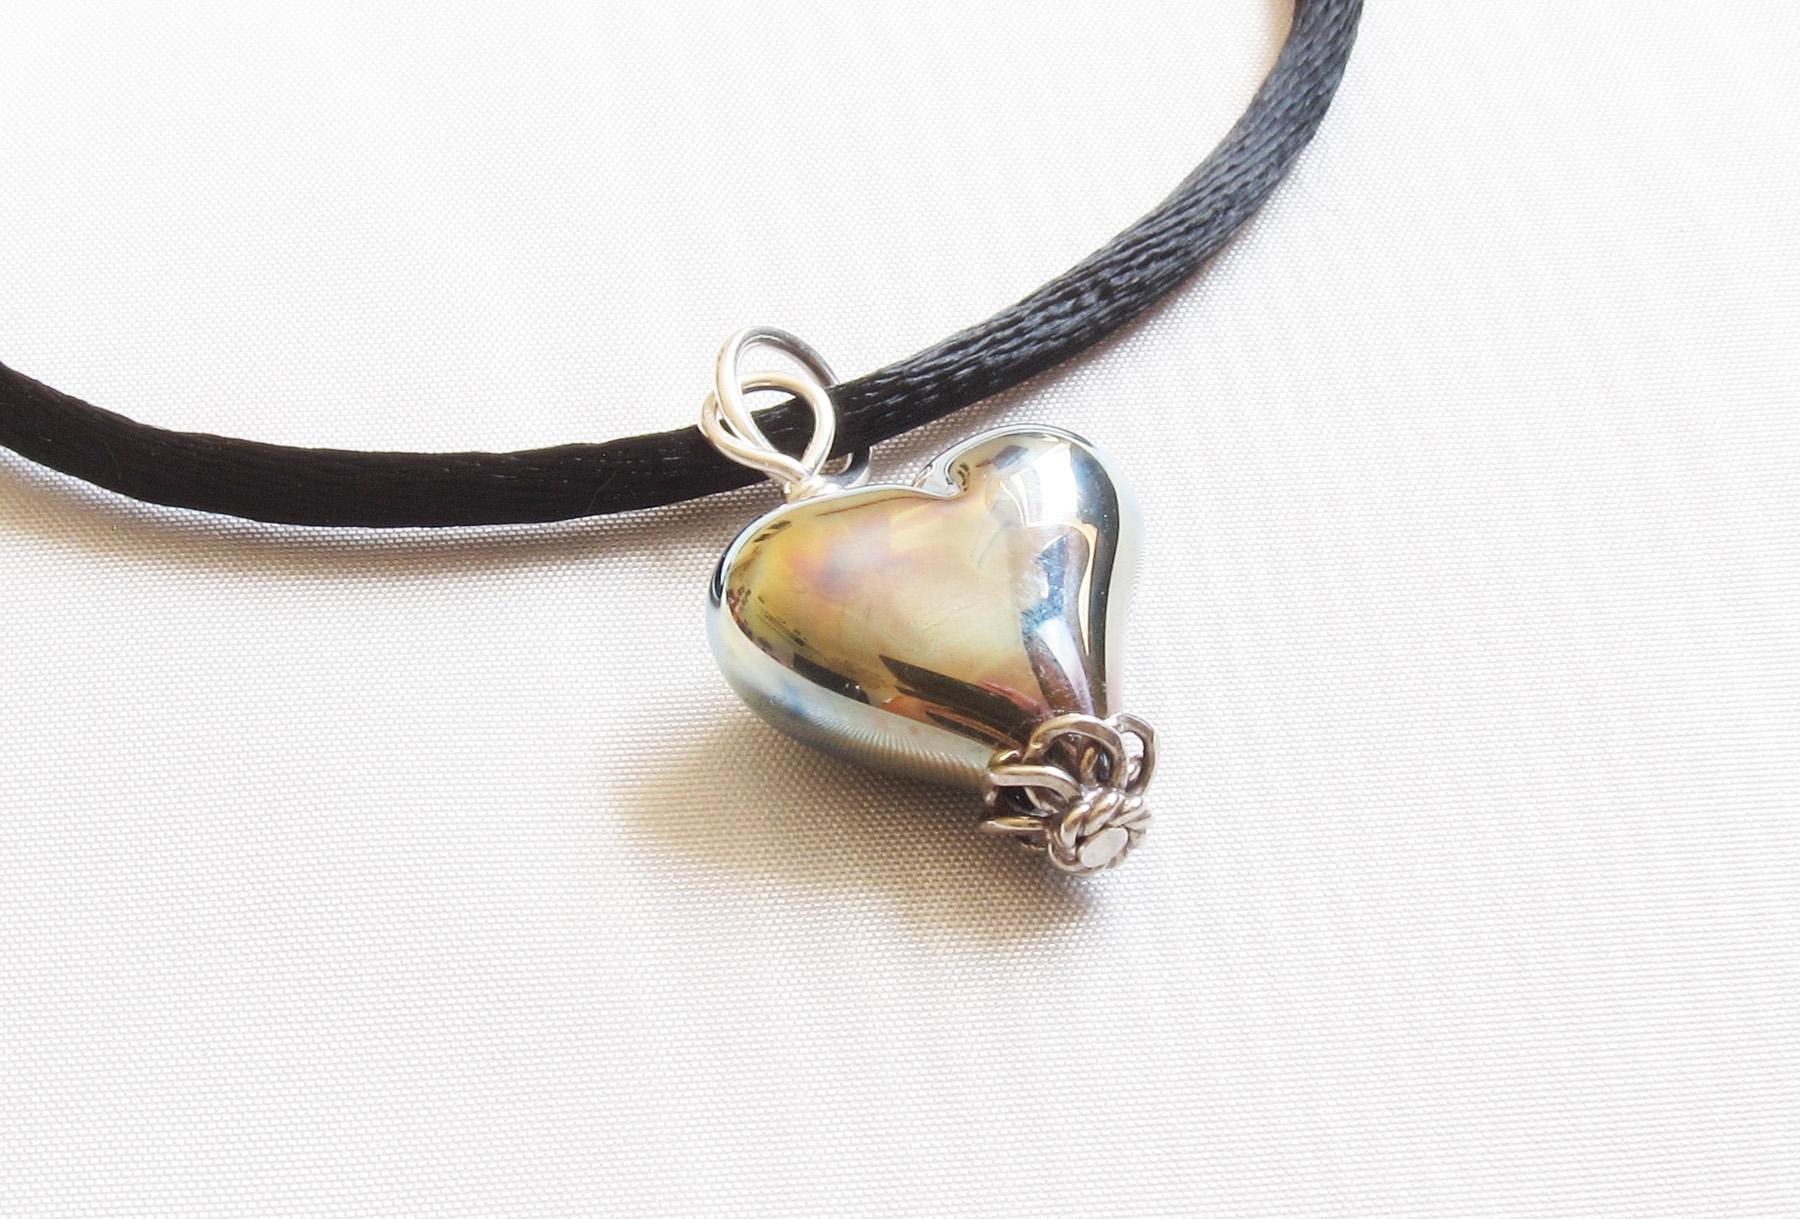 Shiny Metallic Silver Heart Glass Pendant on Satin Cord